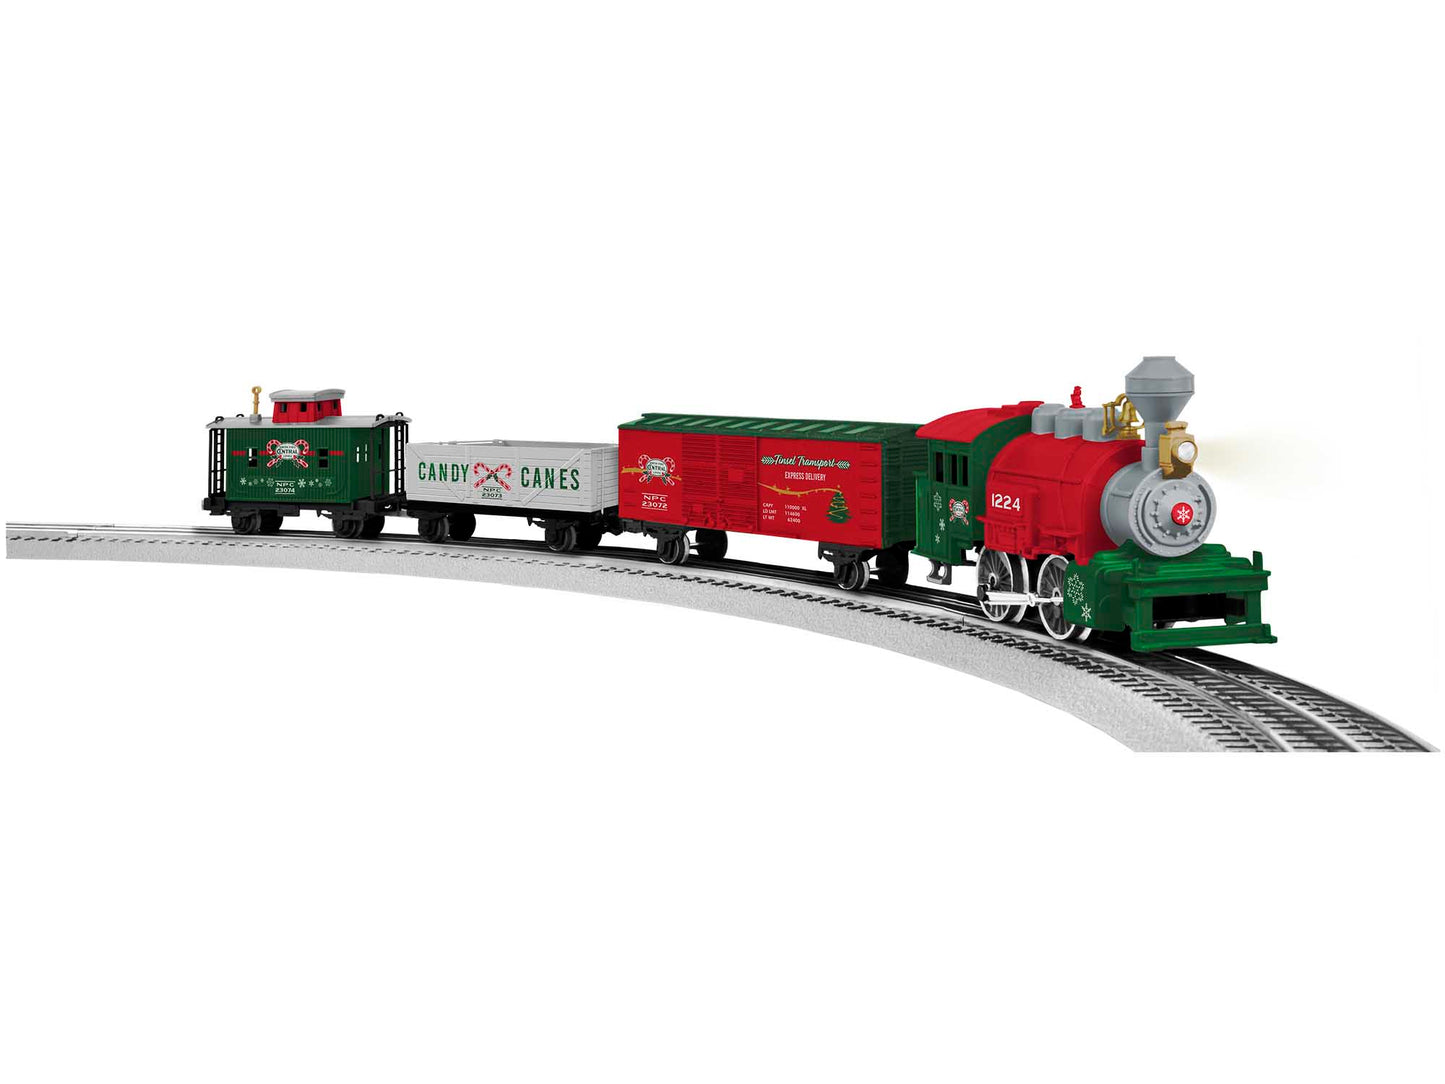 Lionel 2023070 Junction Christmas LionChief O Gauge Steam Starter Train Set